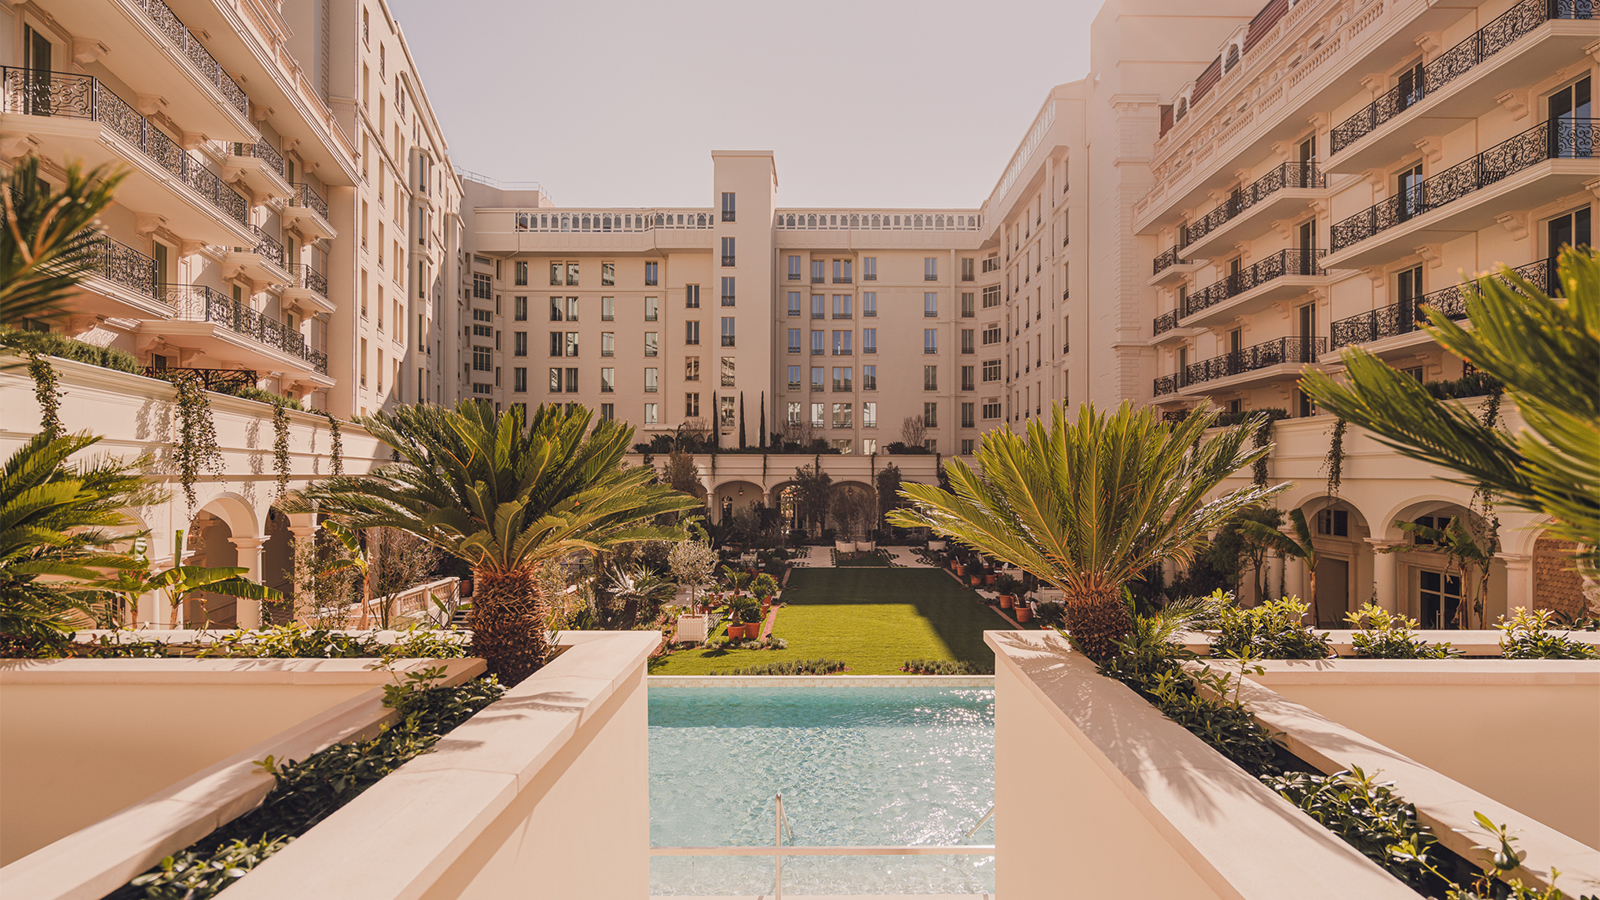 GardenOutdoor PoolCarlton Cannes A Regent Hotel